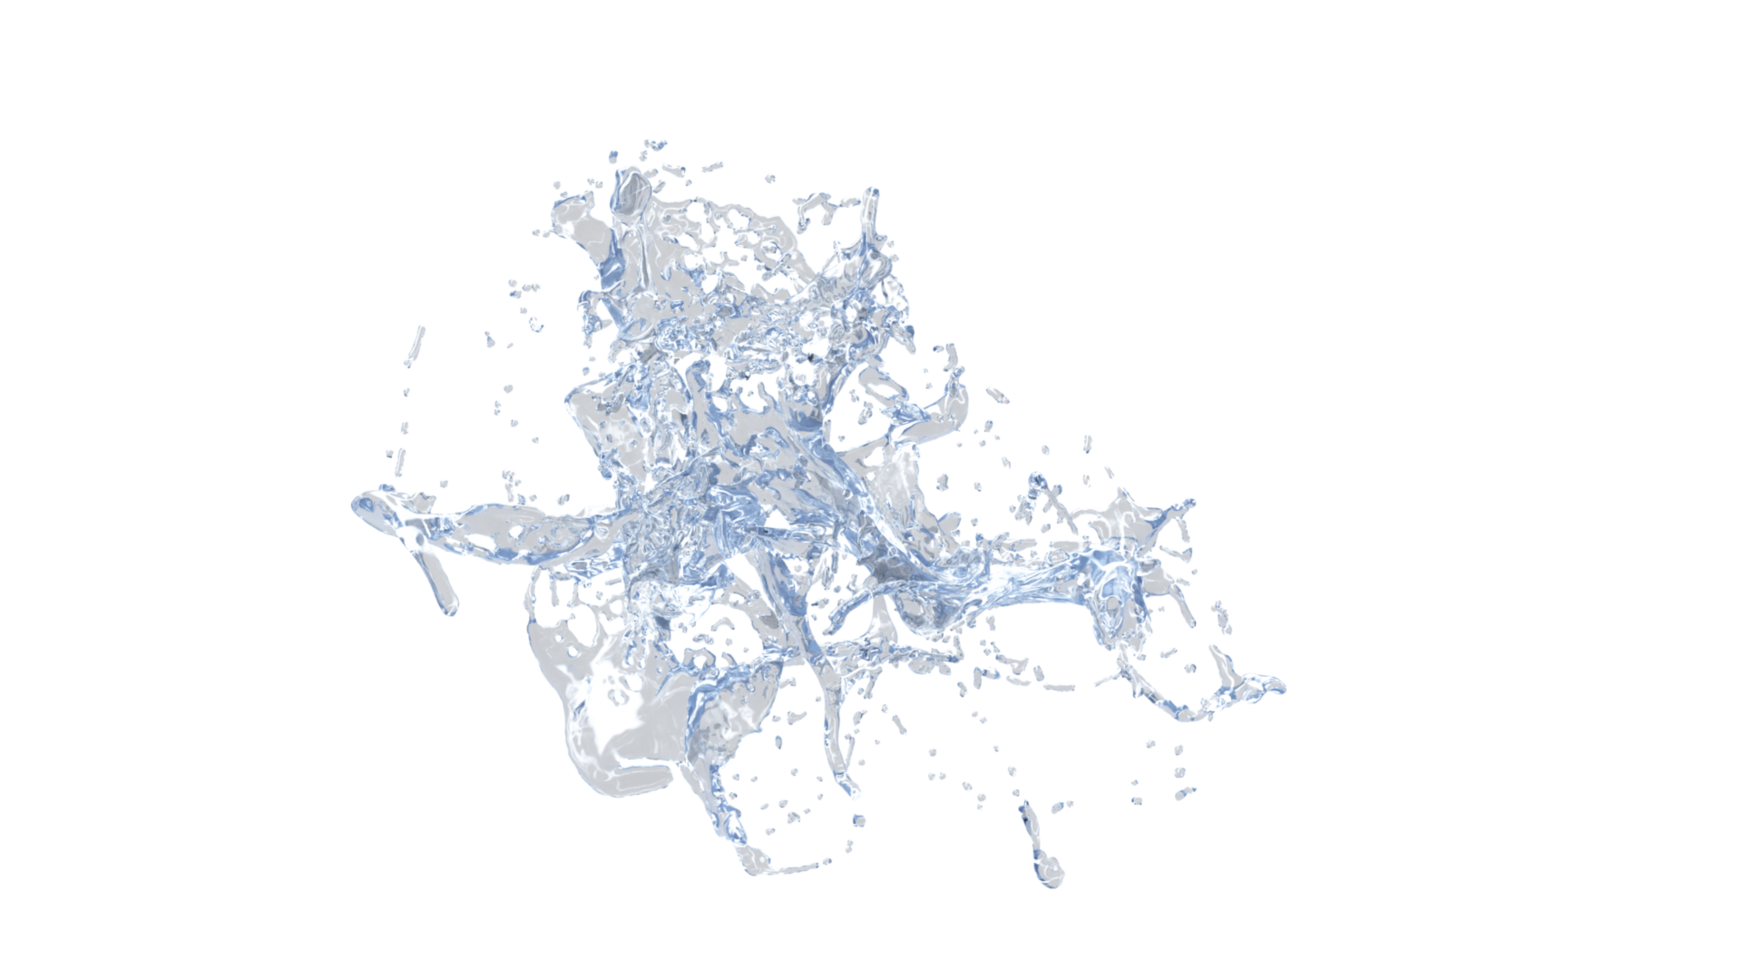 Marco redondo salpicado de agua realista 3d, aqua, salpicadura de líquido transparente. png canal alfa.